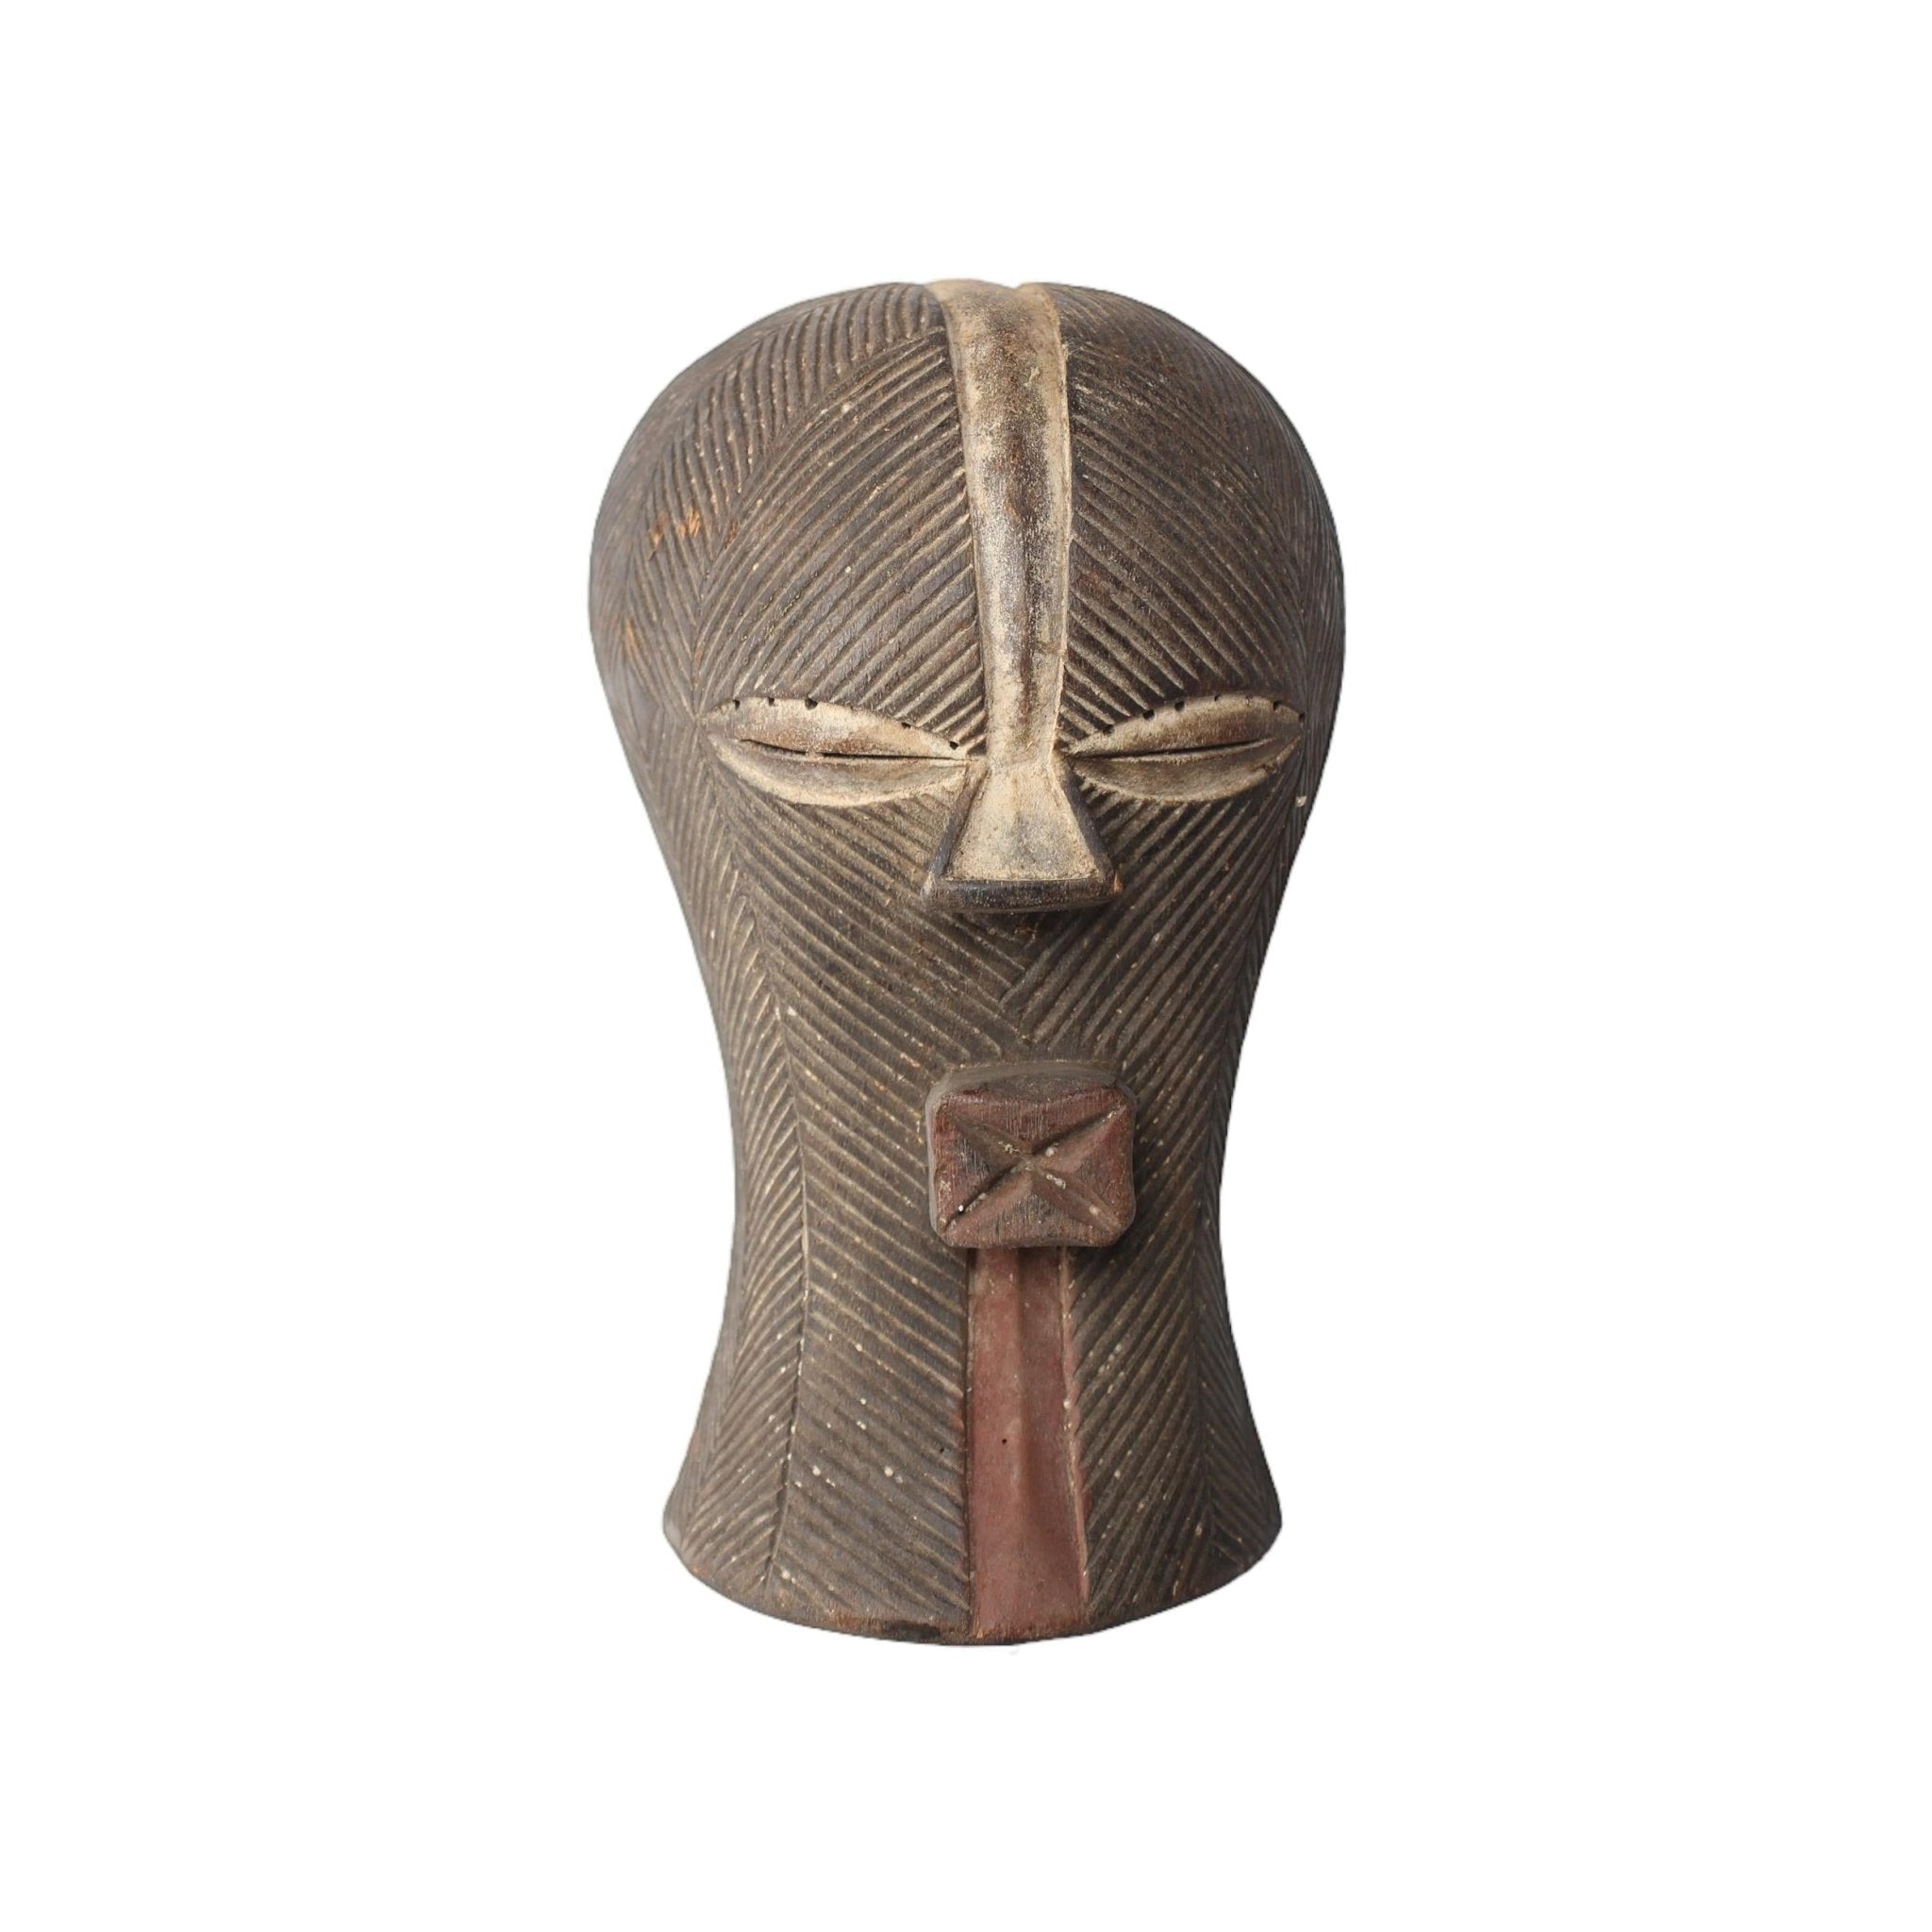 Basonge/Songye Tribe Mask ~13.0" Tall - African Angel Art